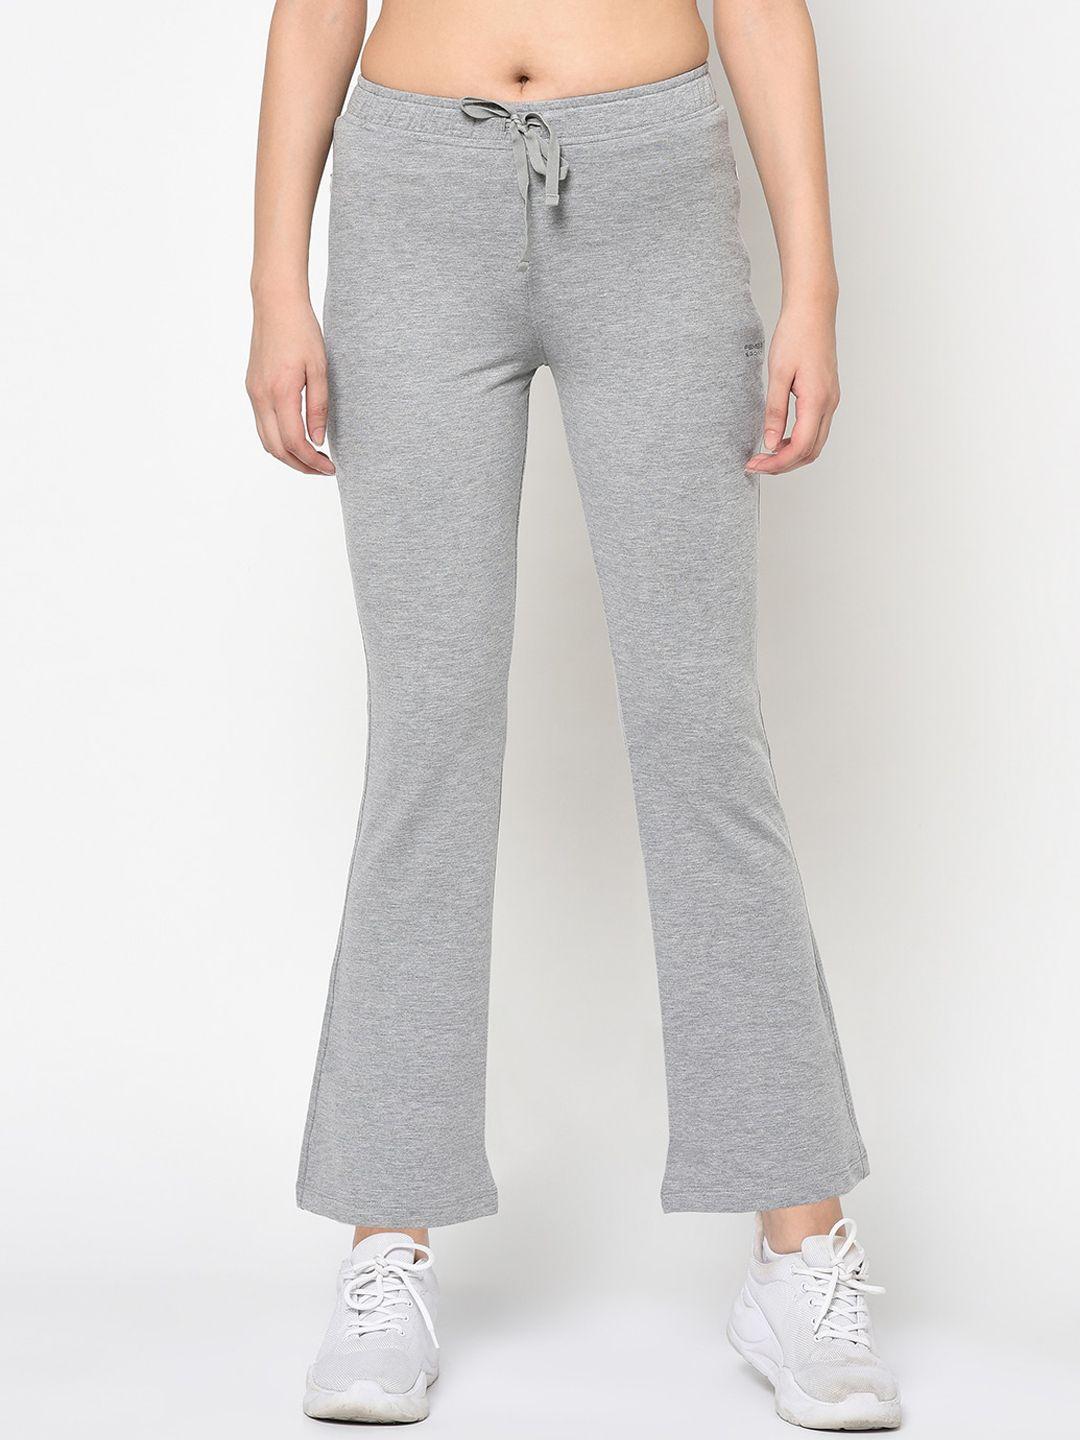 femea women grey solid bootcut track pants